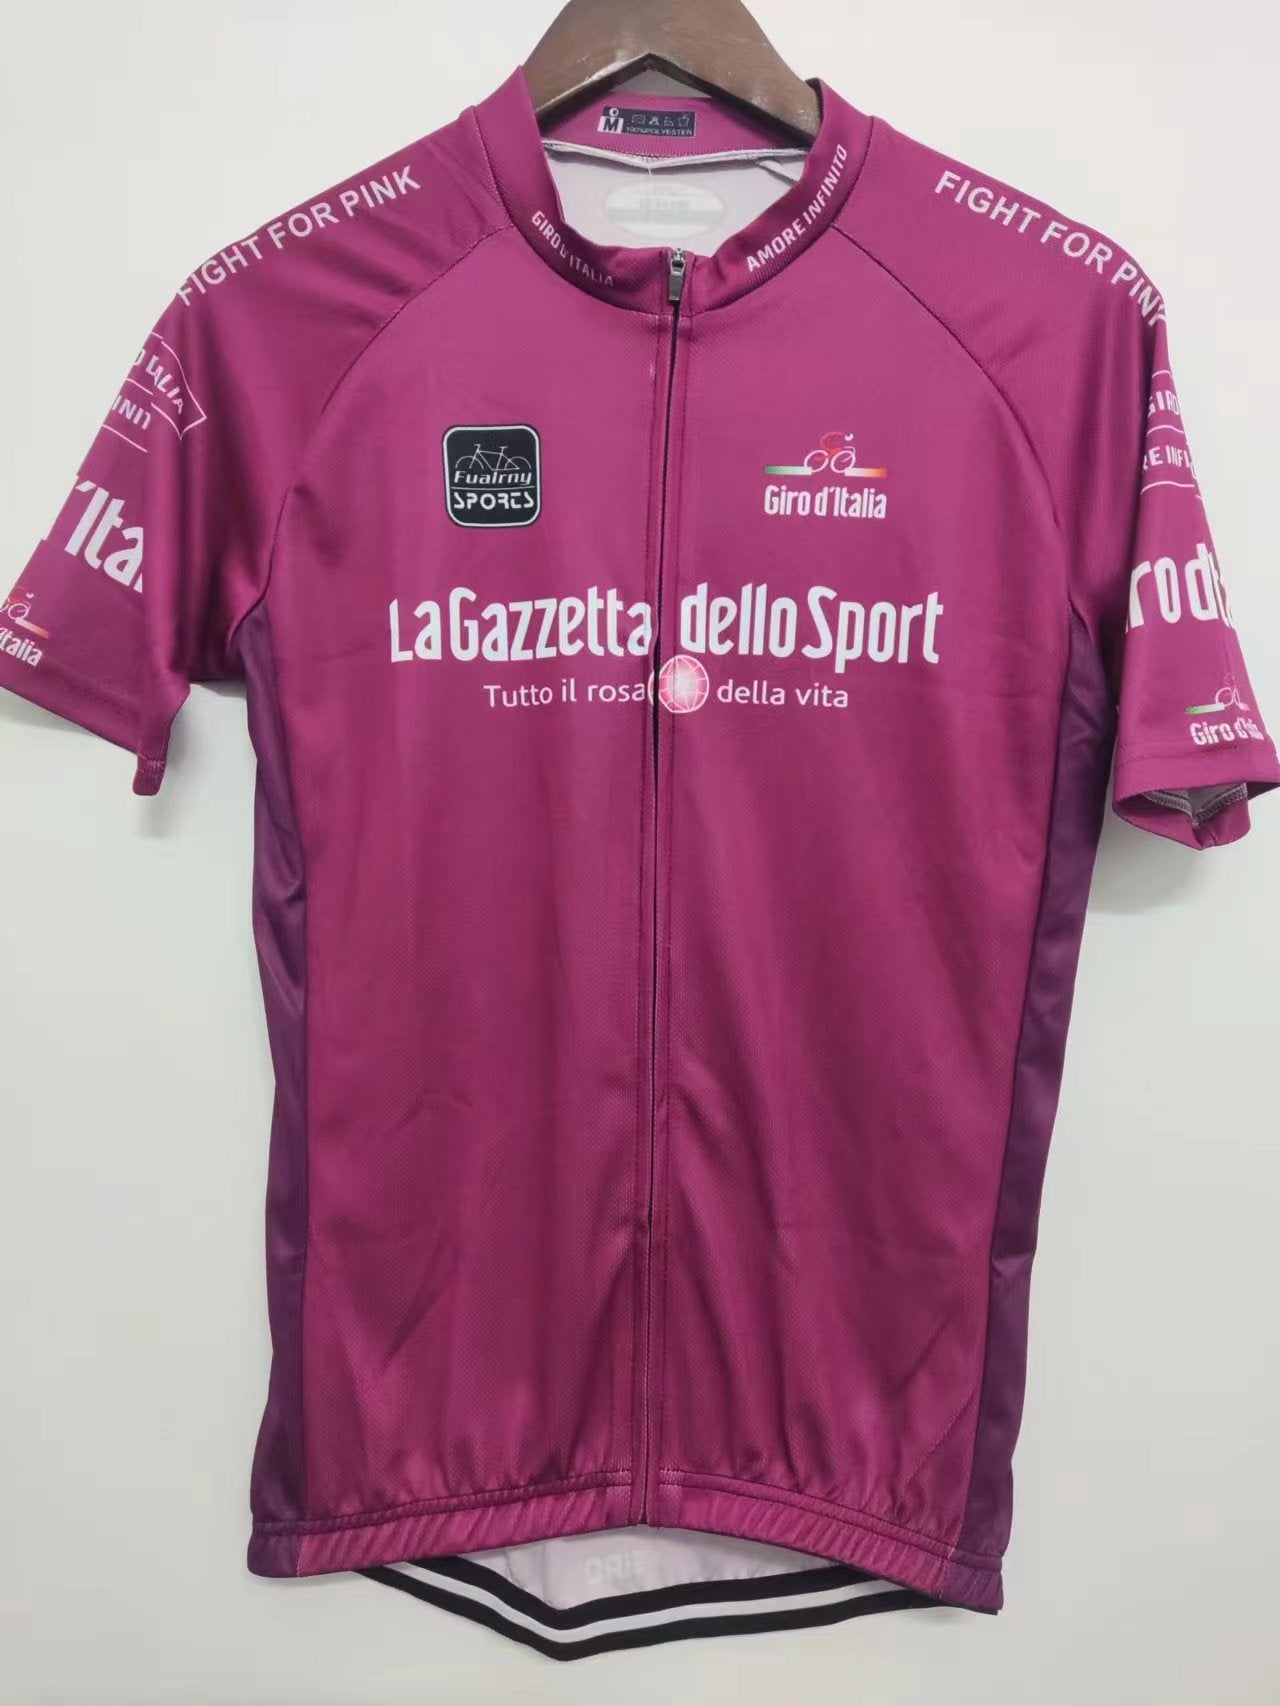 Giro d'Italia purple cycling jersey